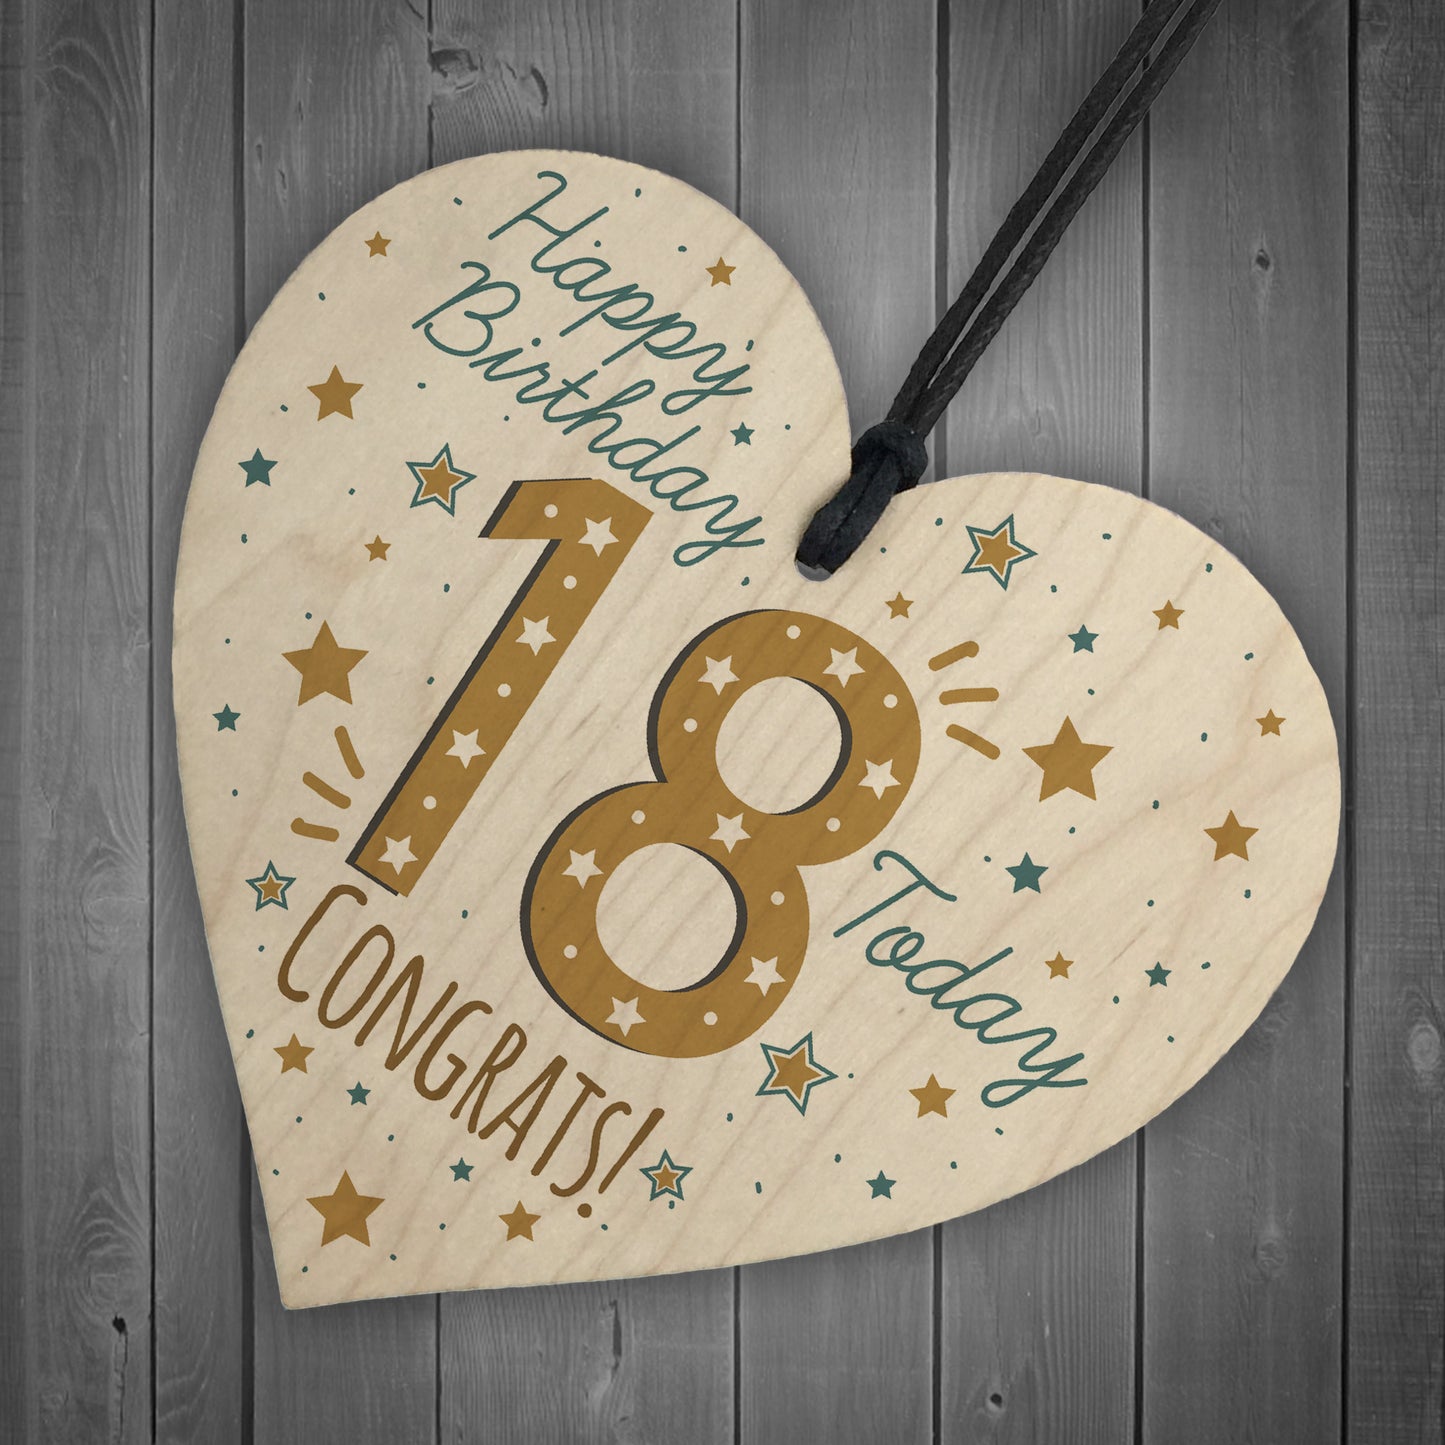 18th Birthday Handmade Wooden Heart Plaque Friendship Card Gift